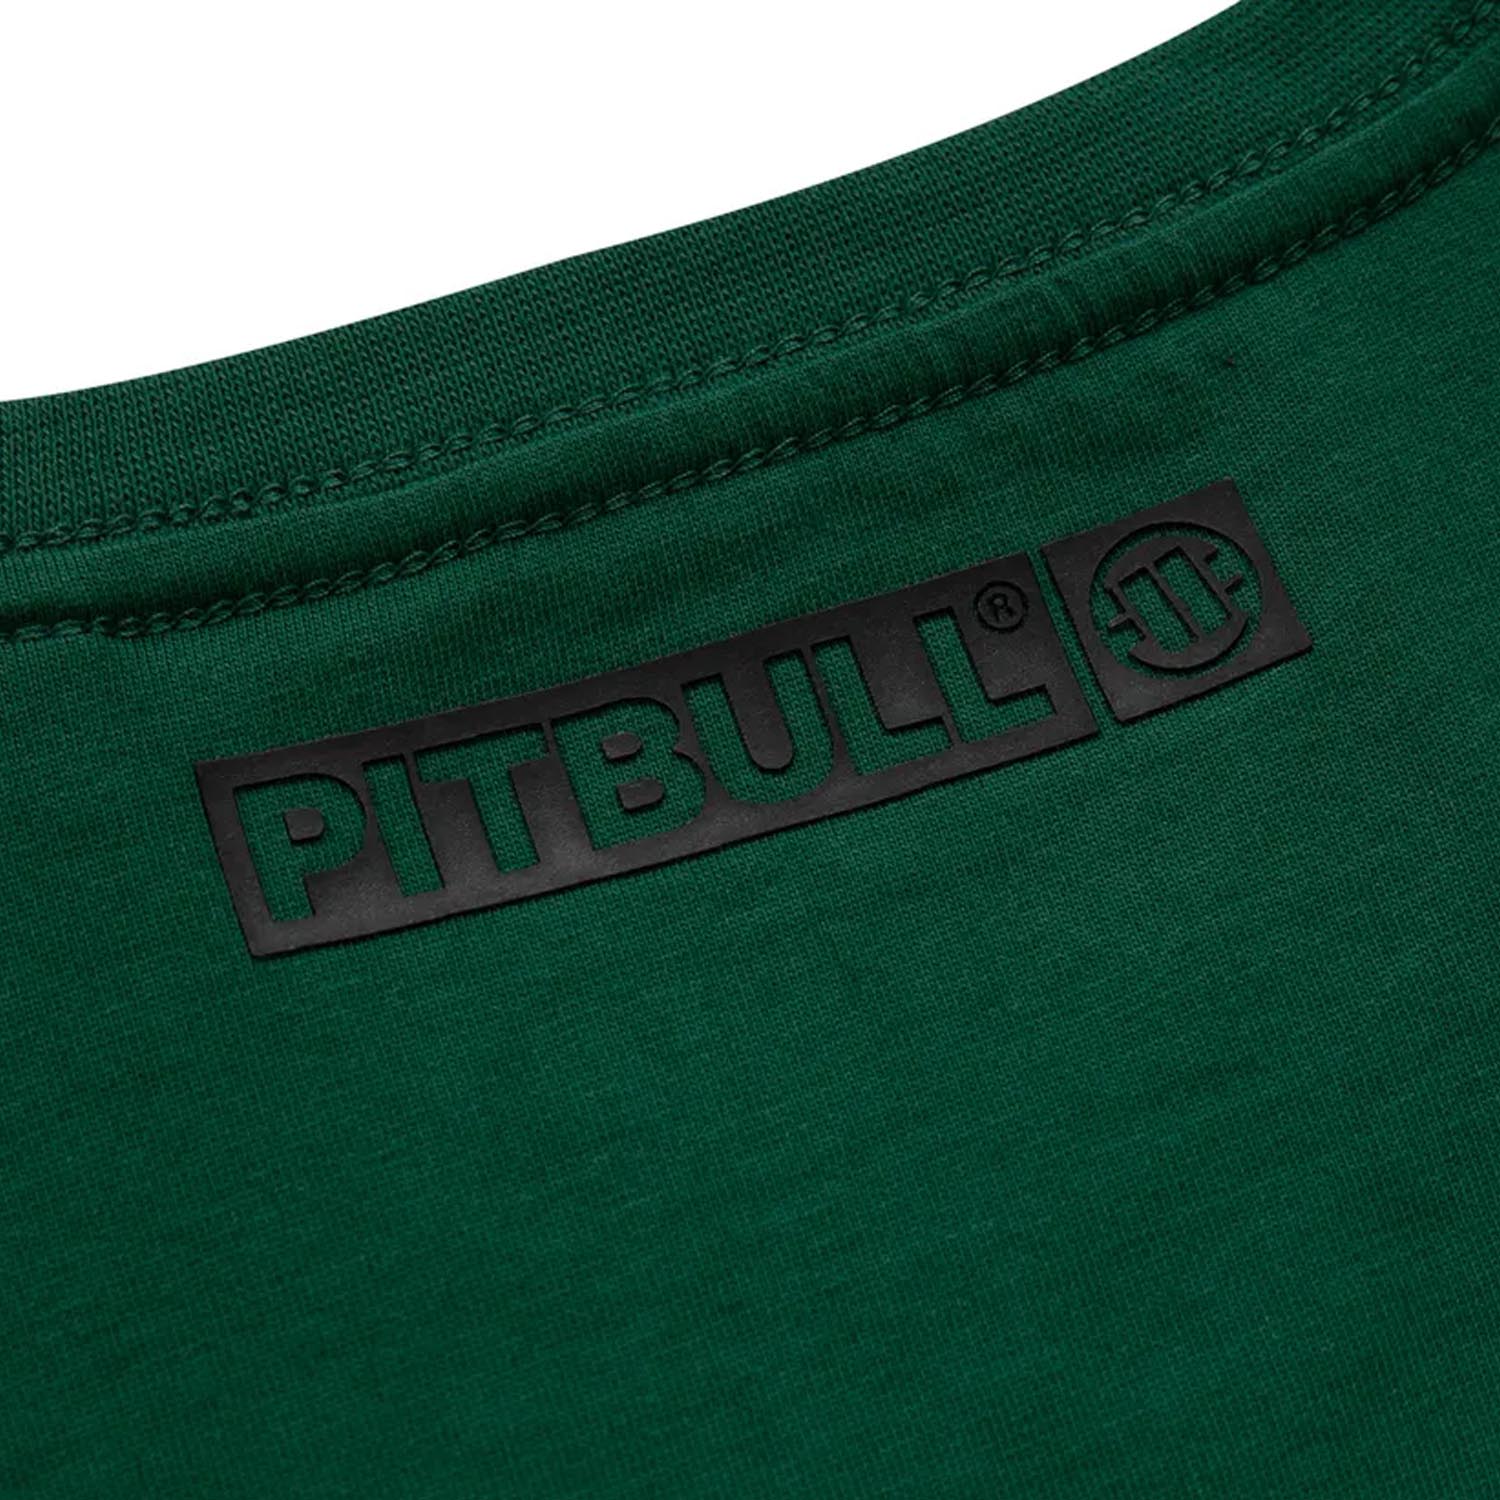 Pit Bull West Coast T-Shirt, Hilltop S70, blattgrün, S | S | 1341784-1